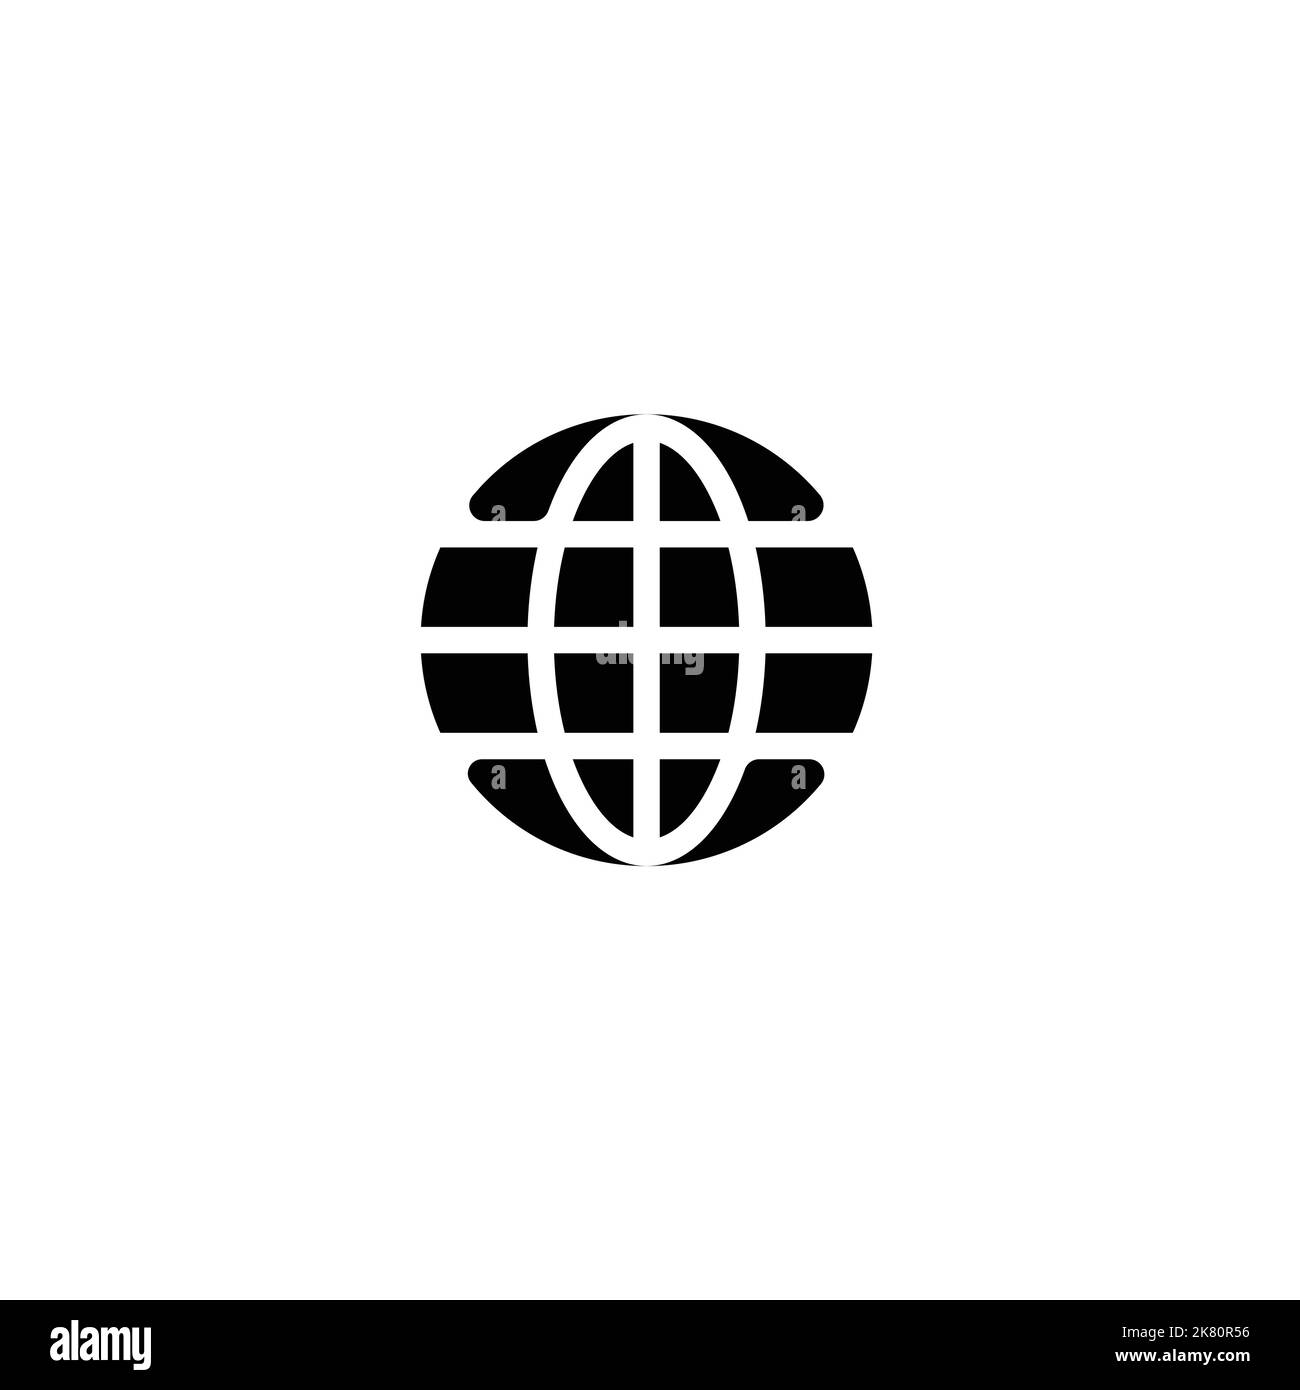 black single round globe icon, logo type for app, websites. on white isolated background. Stock Vector